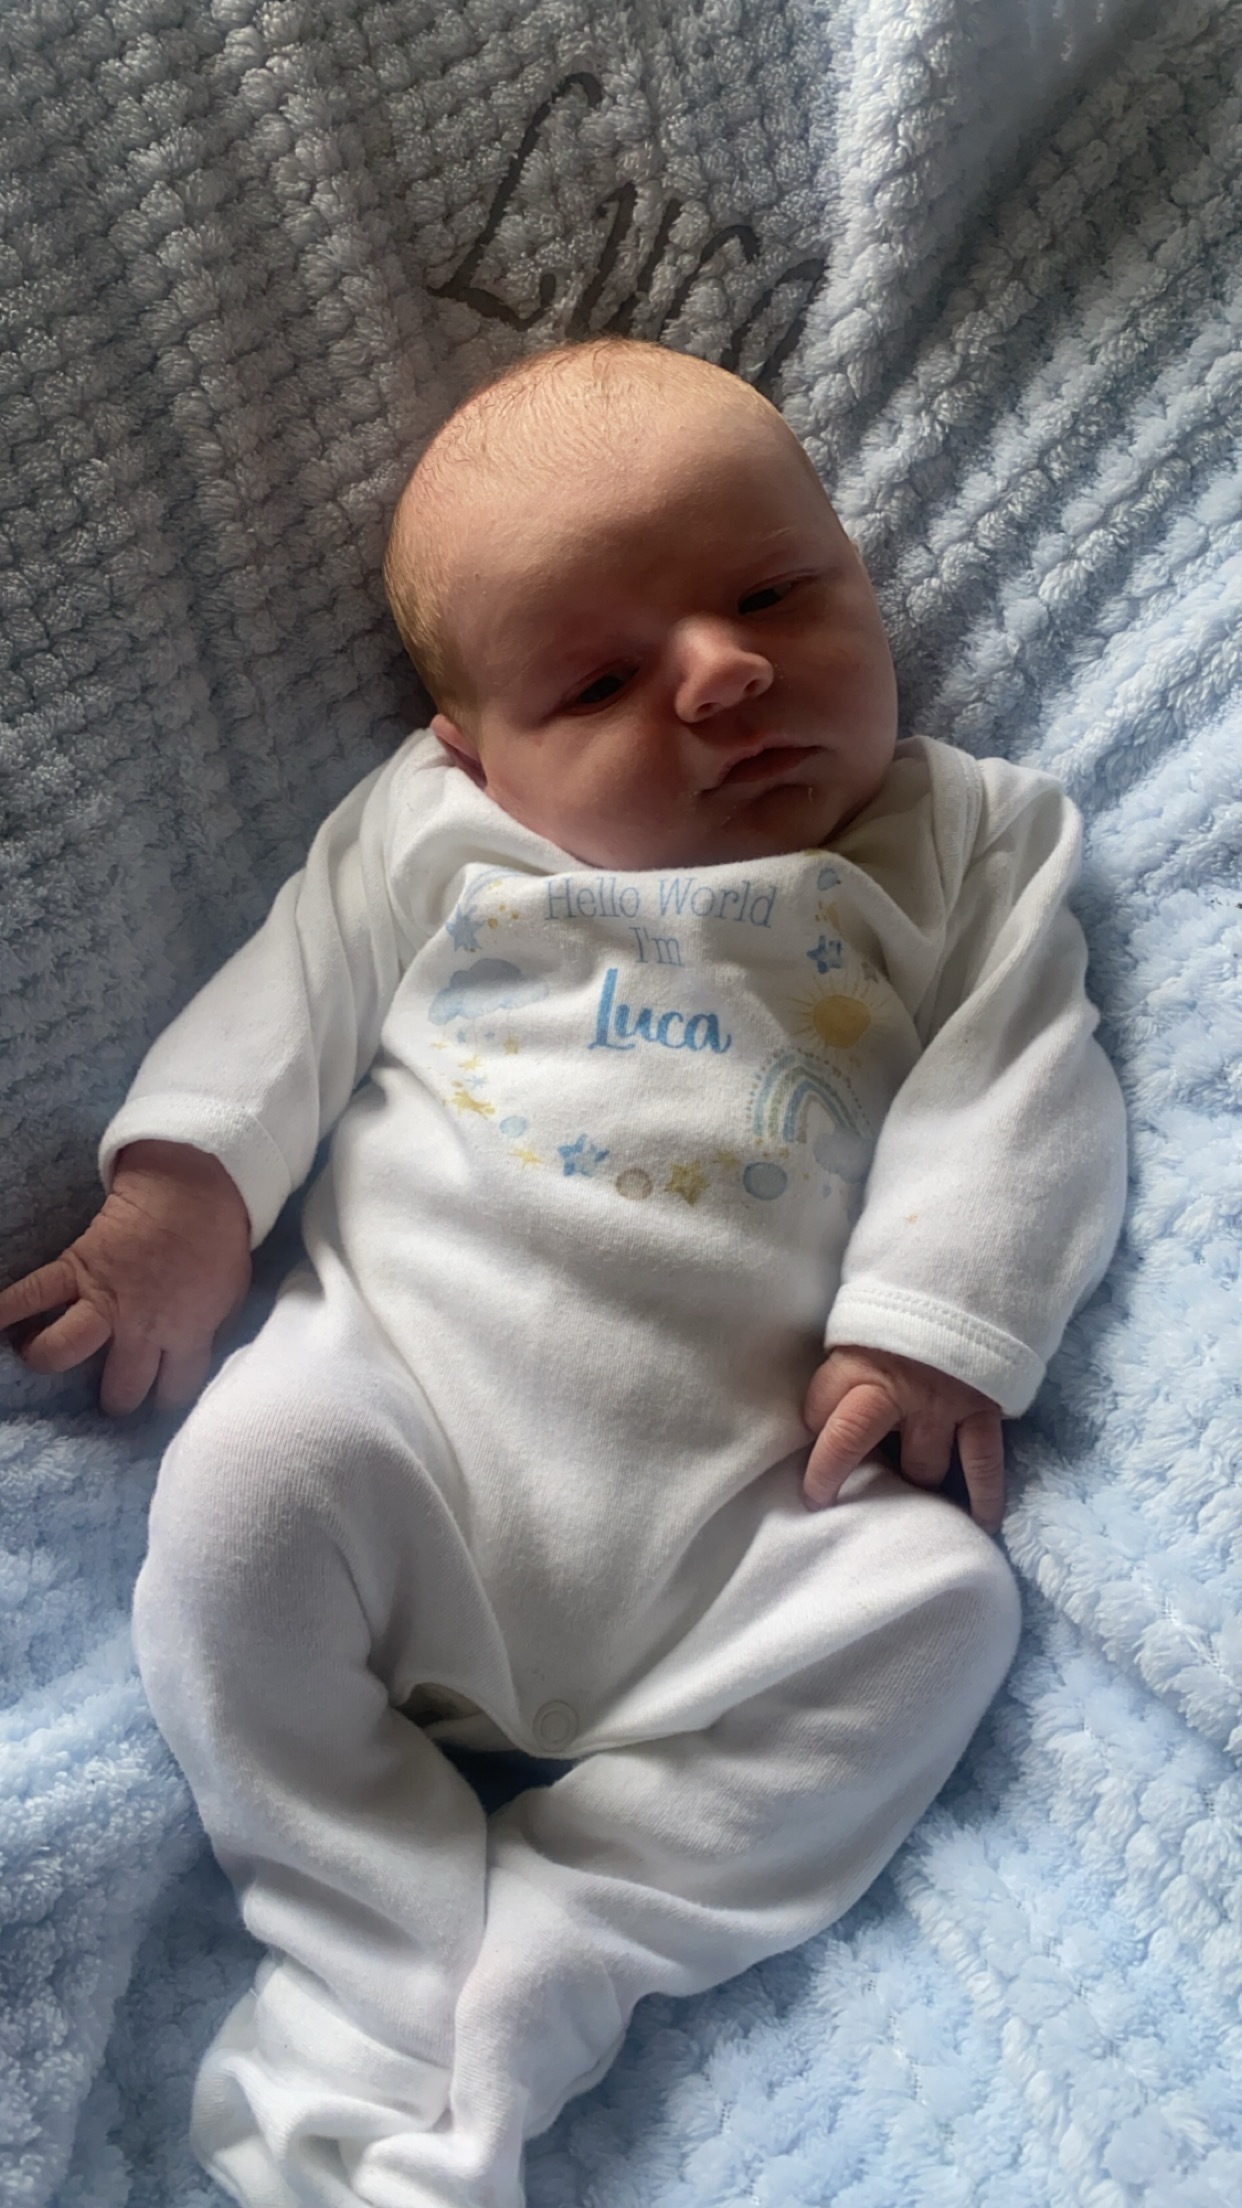 Luca Oare at one-week-old.